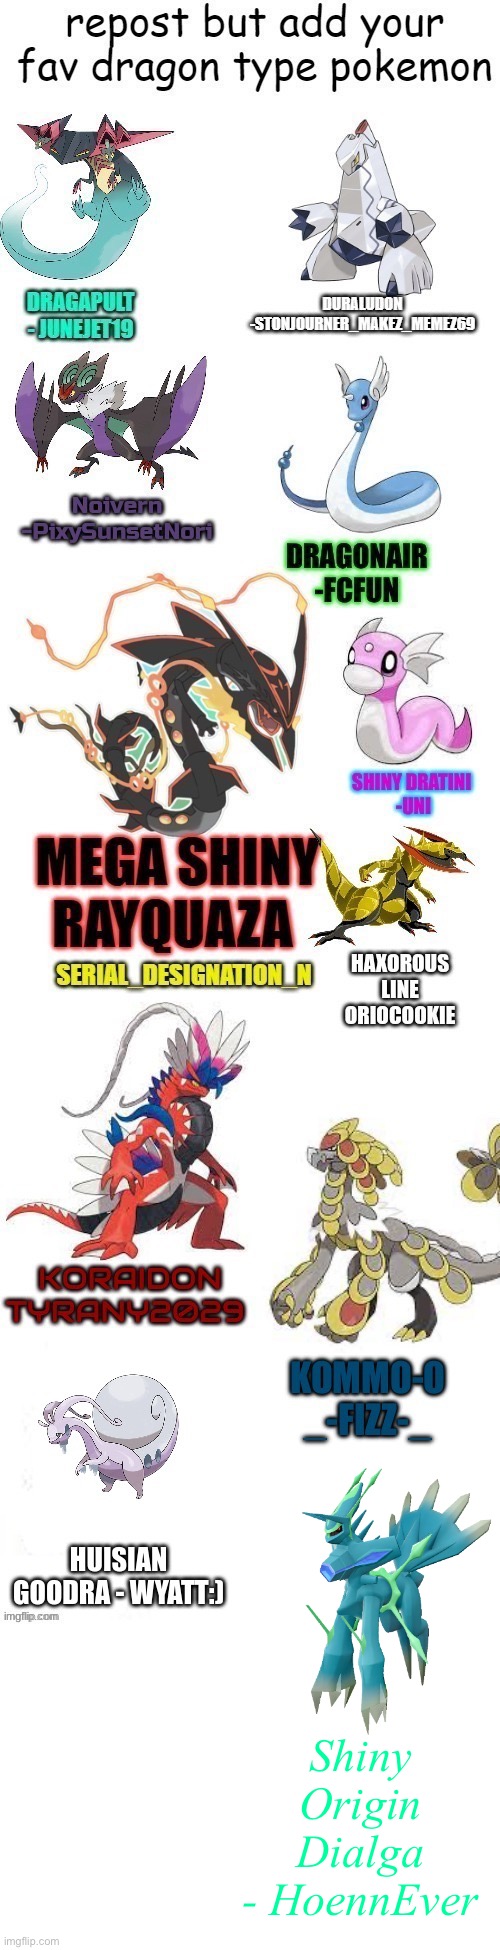 Shiny Origin Dialga
- HoennEver | image tagged in pokemon | made w/ Imgflip meme maker